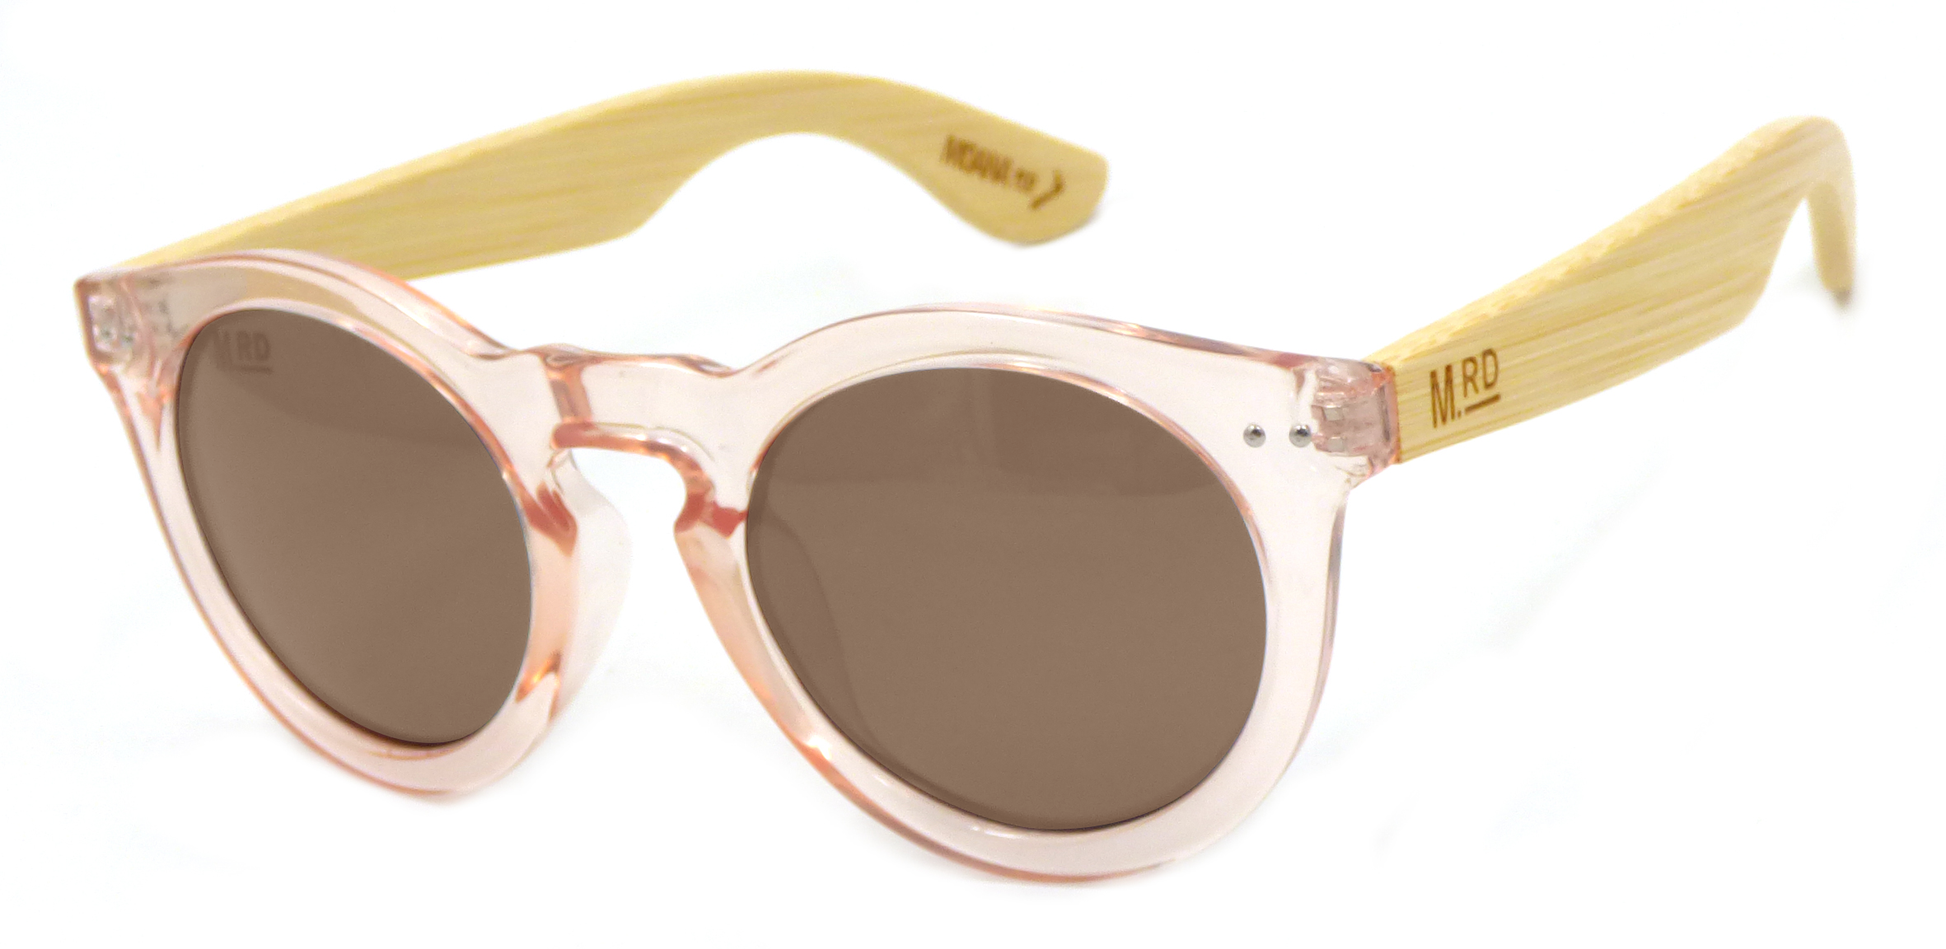 Moana Road Grace Kelly Pink & Wood Sunglasses